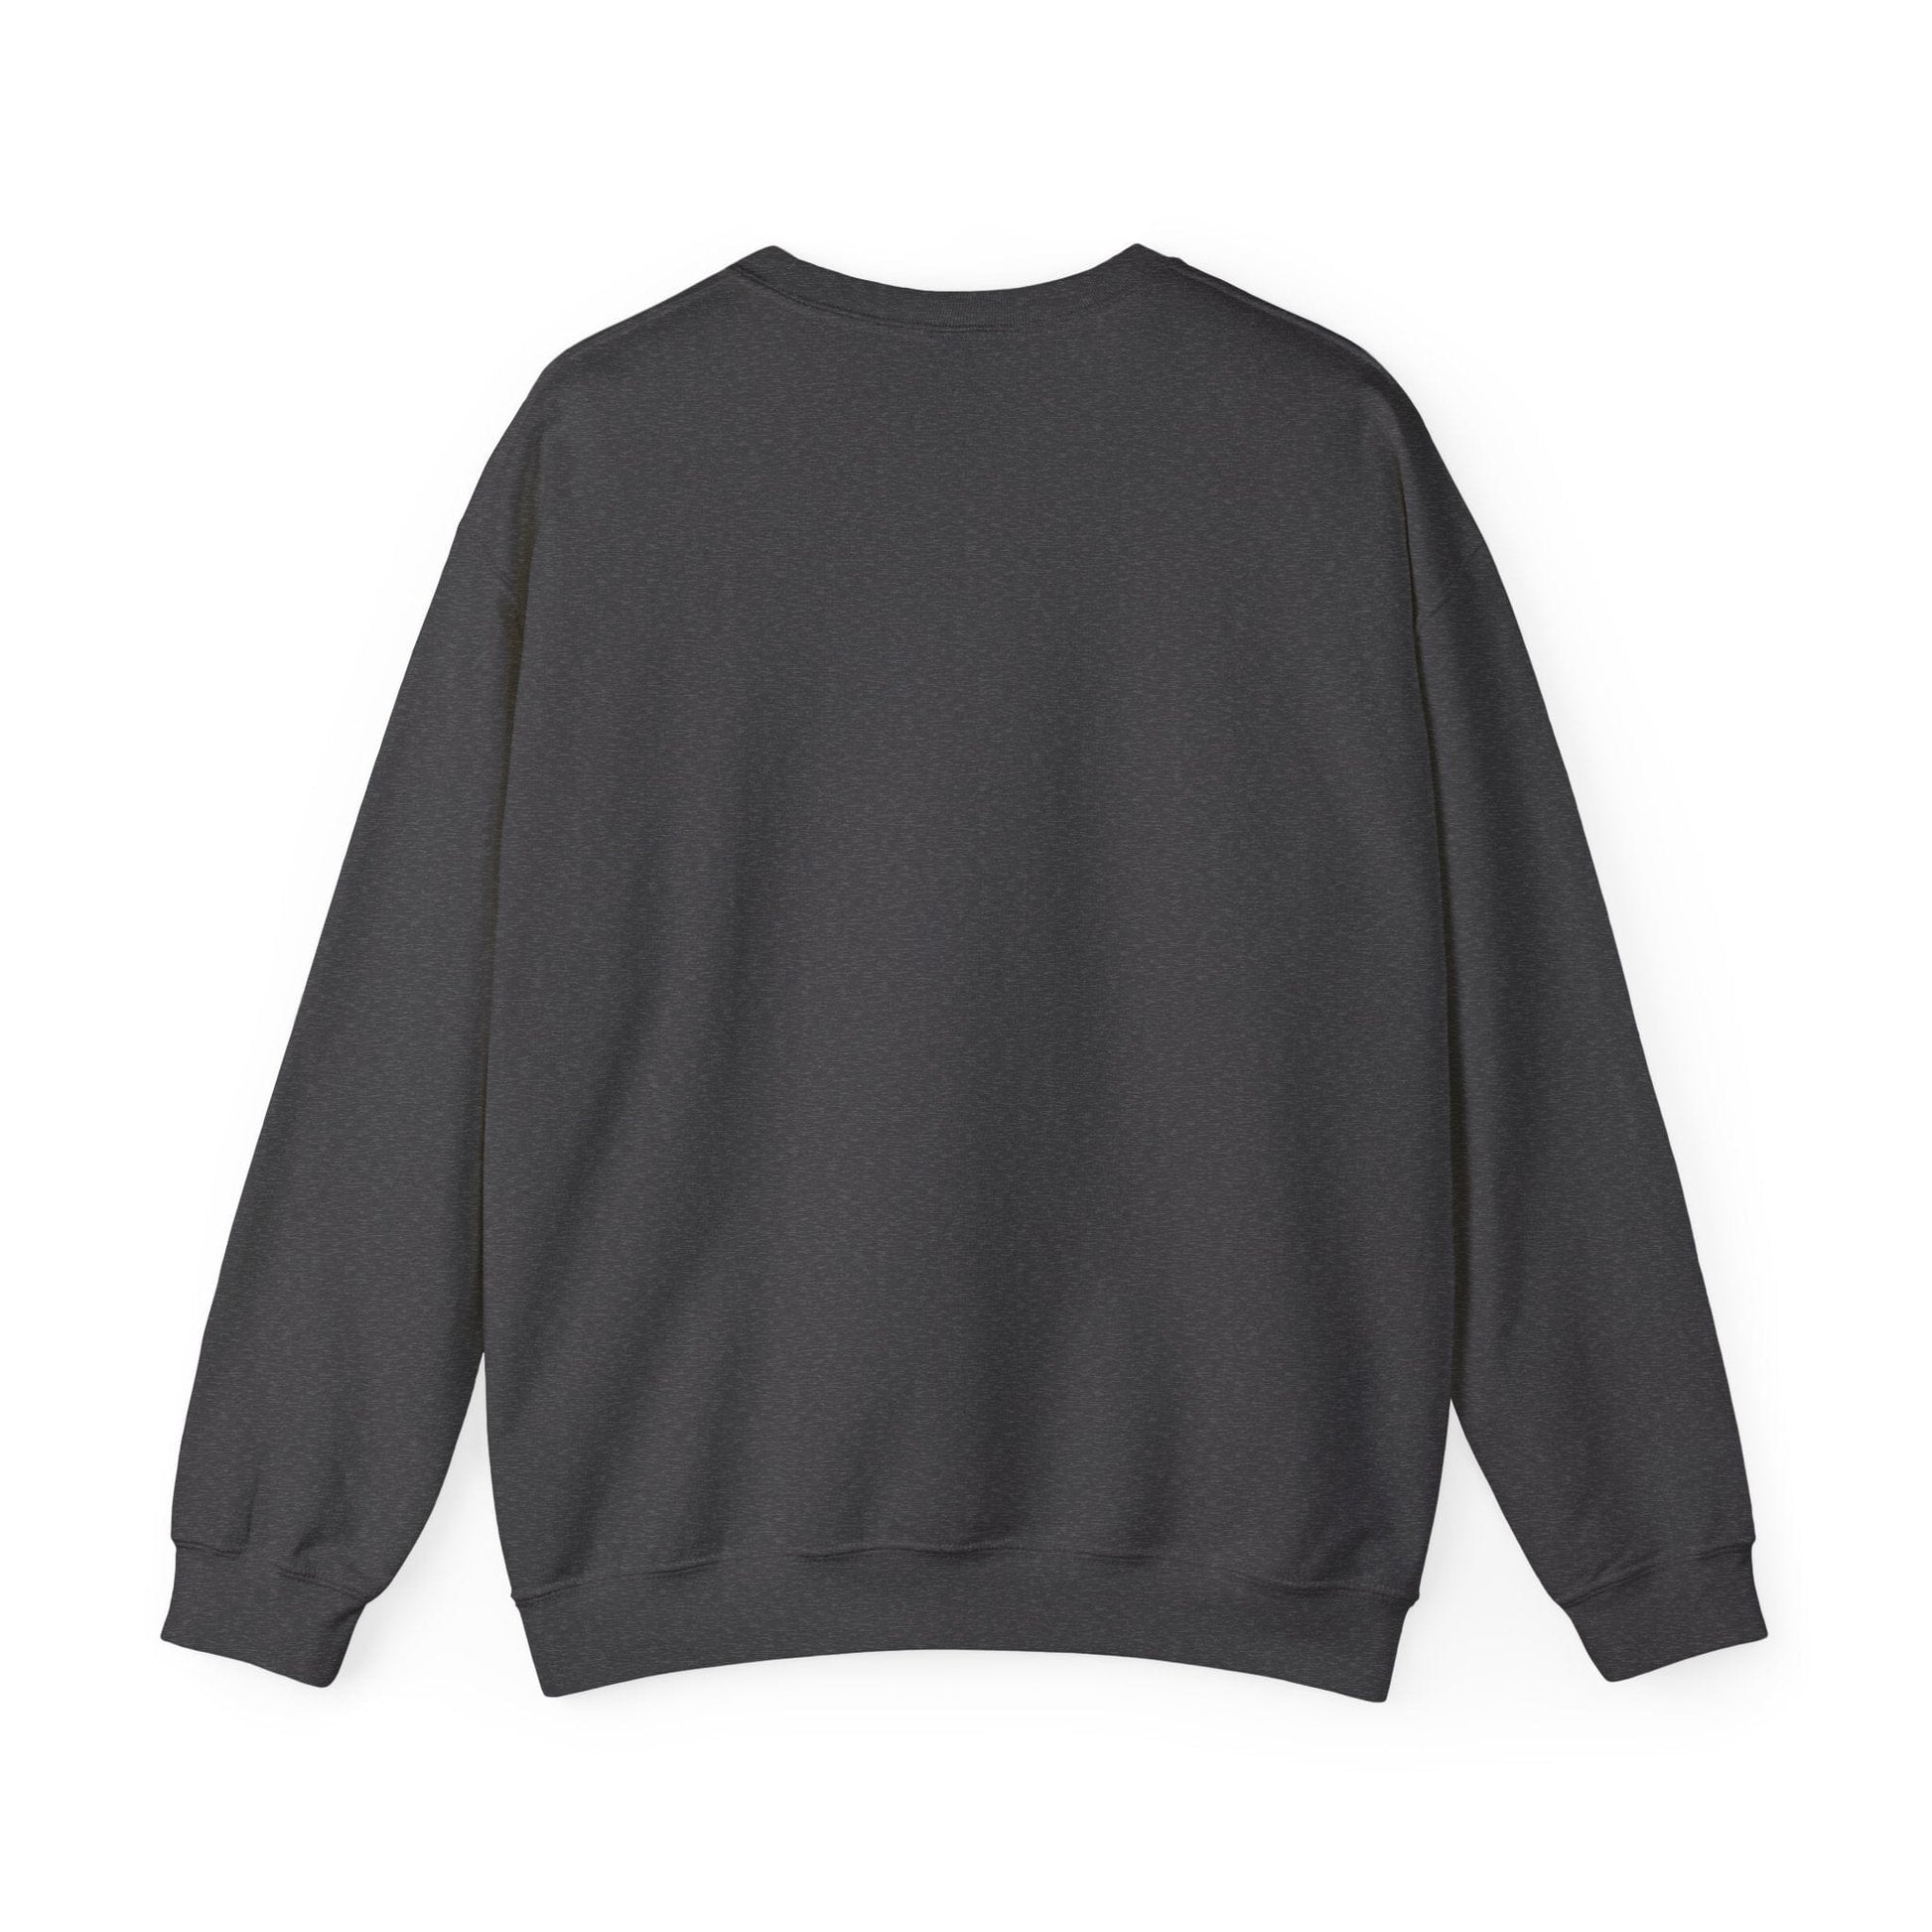 Sweatshirt "Scales of Affection" Libra Romantic Sweater: Enchant in Comfort